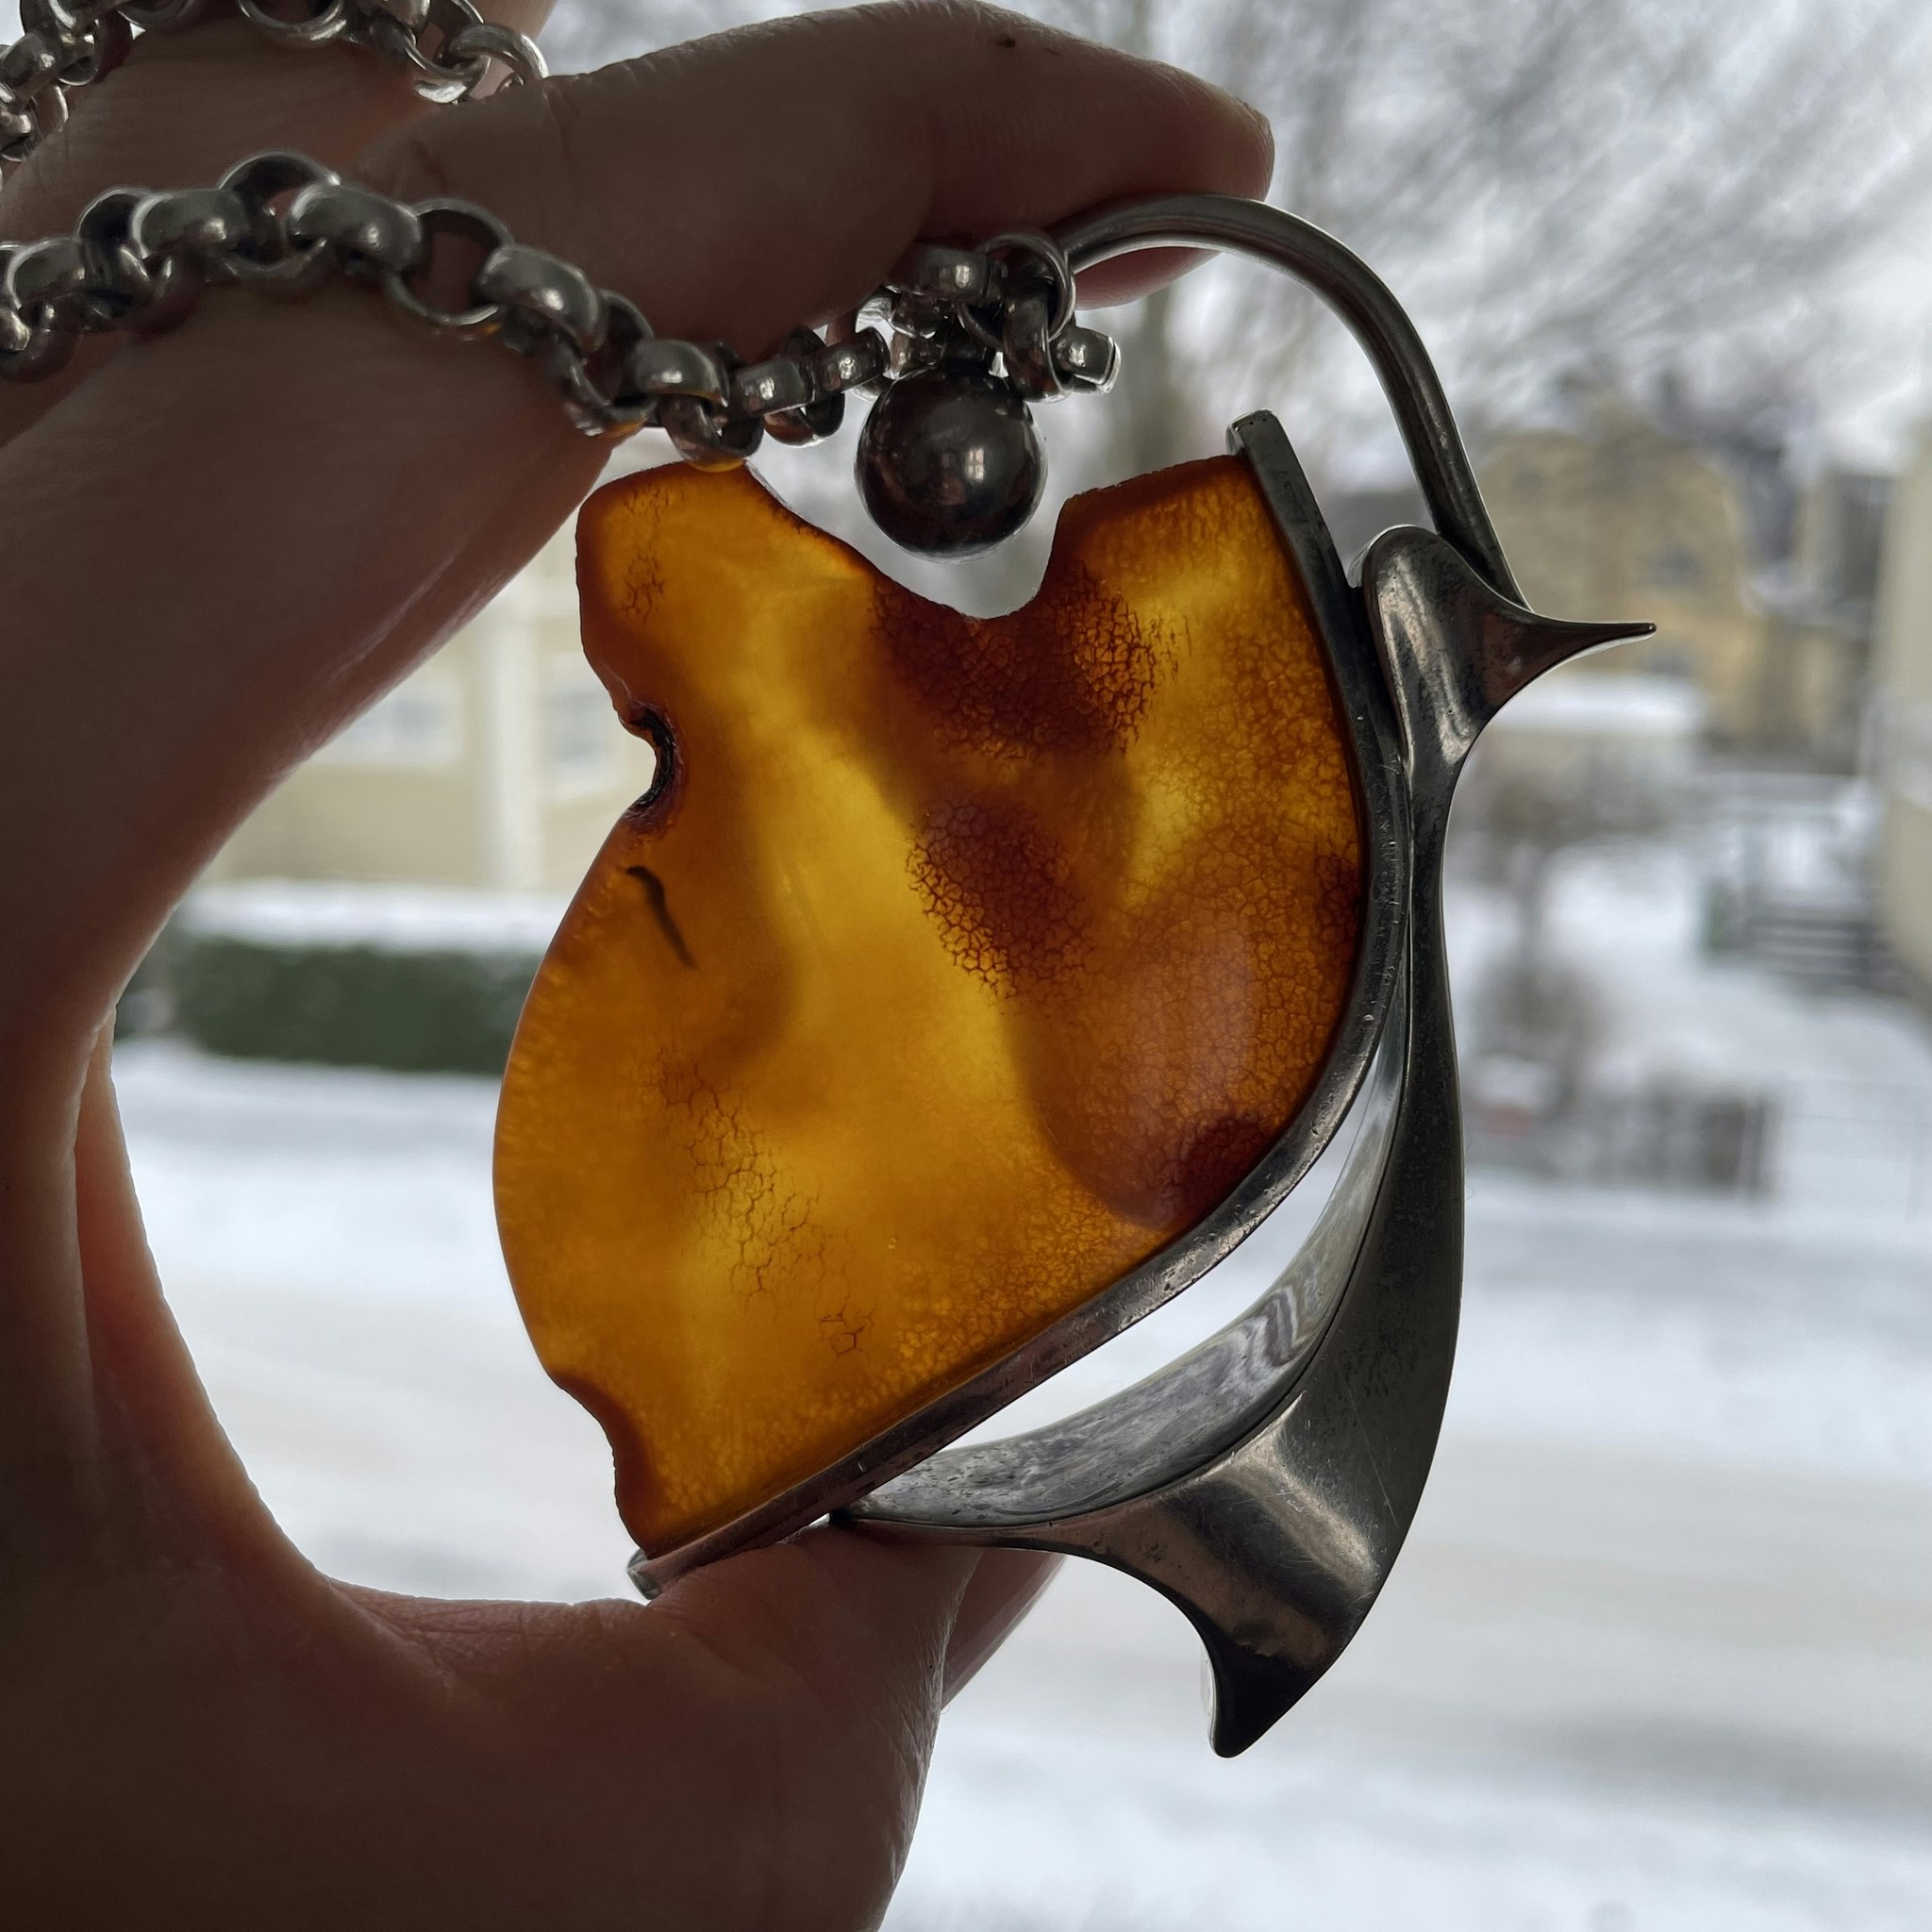 Natural amber pendant with silver Baltic amber Scandinavian design 56g #1757